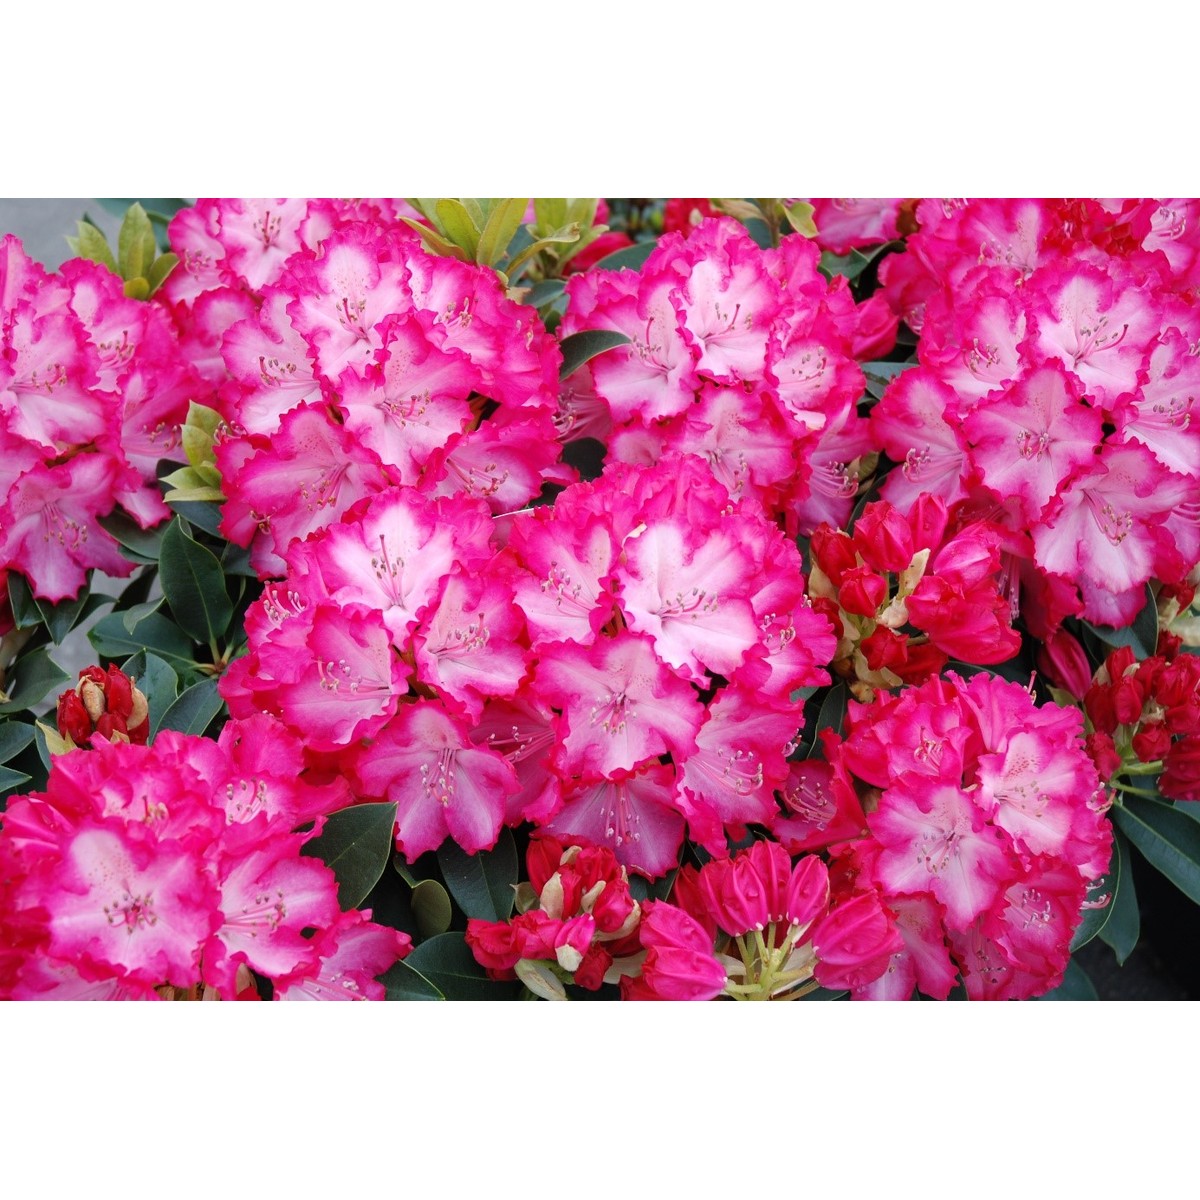   Rhododendron 'XXL'®  C15 hauteur 70/80 cm